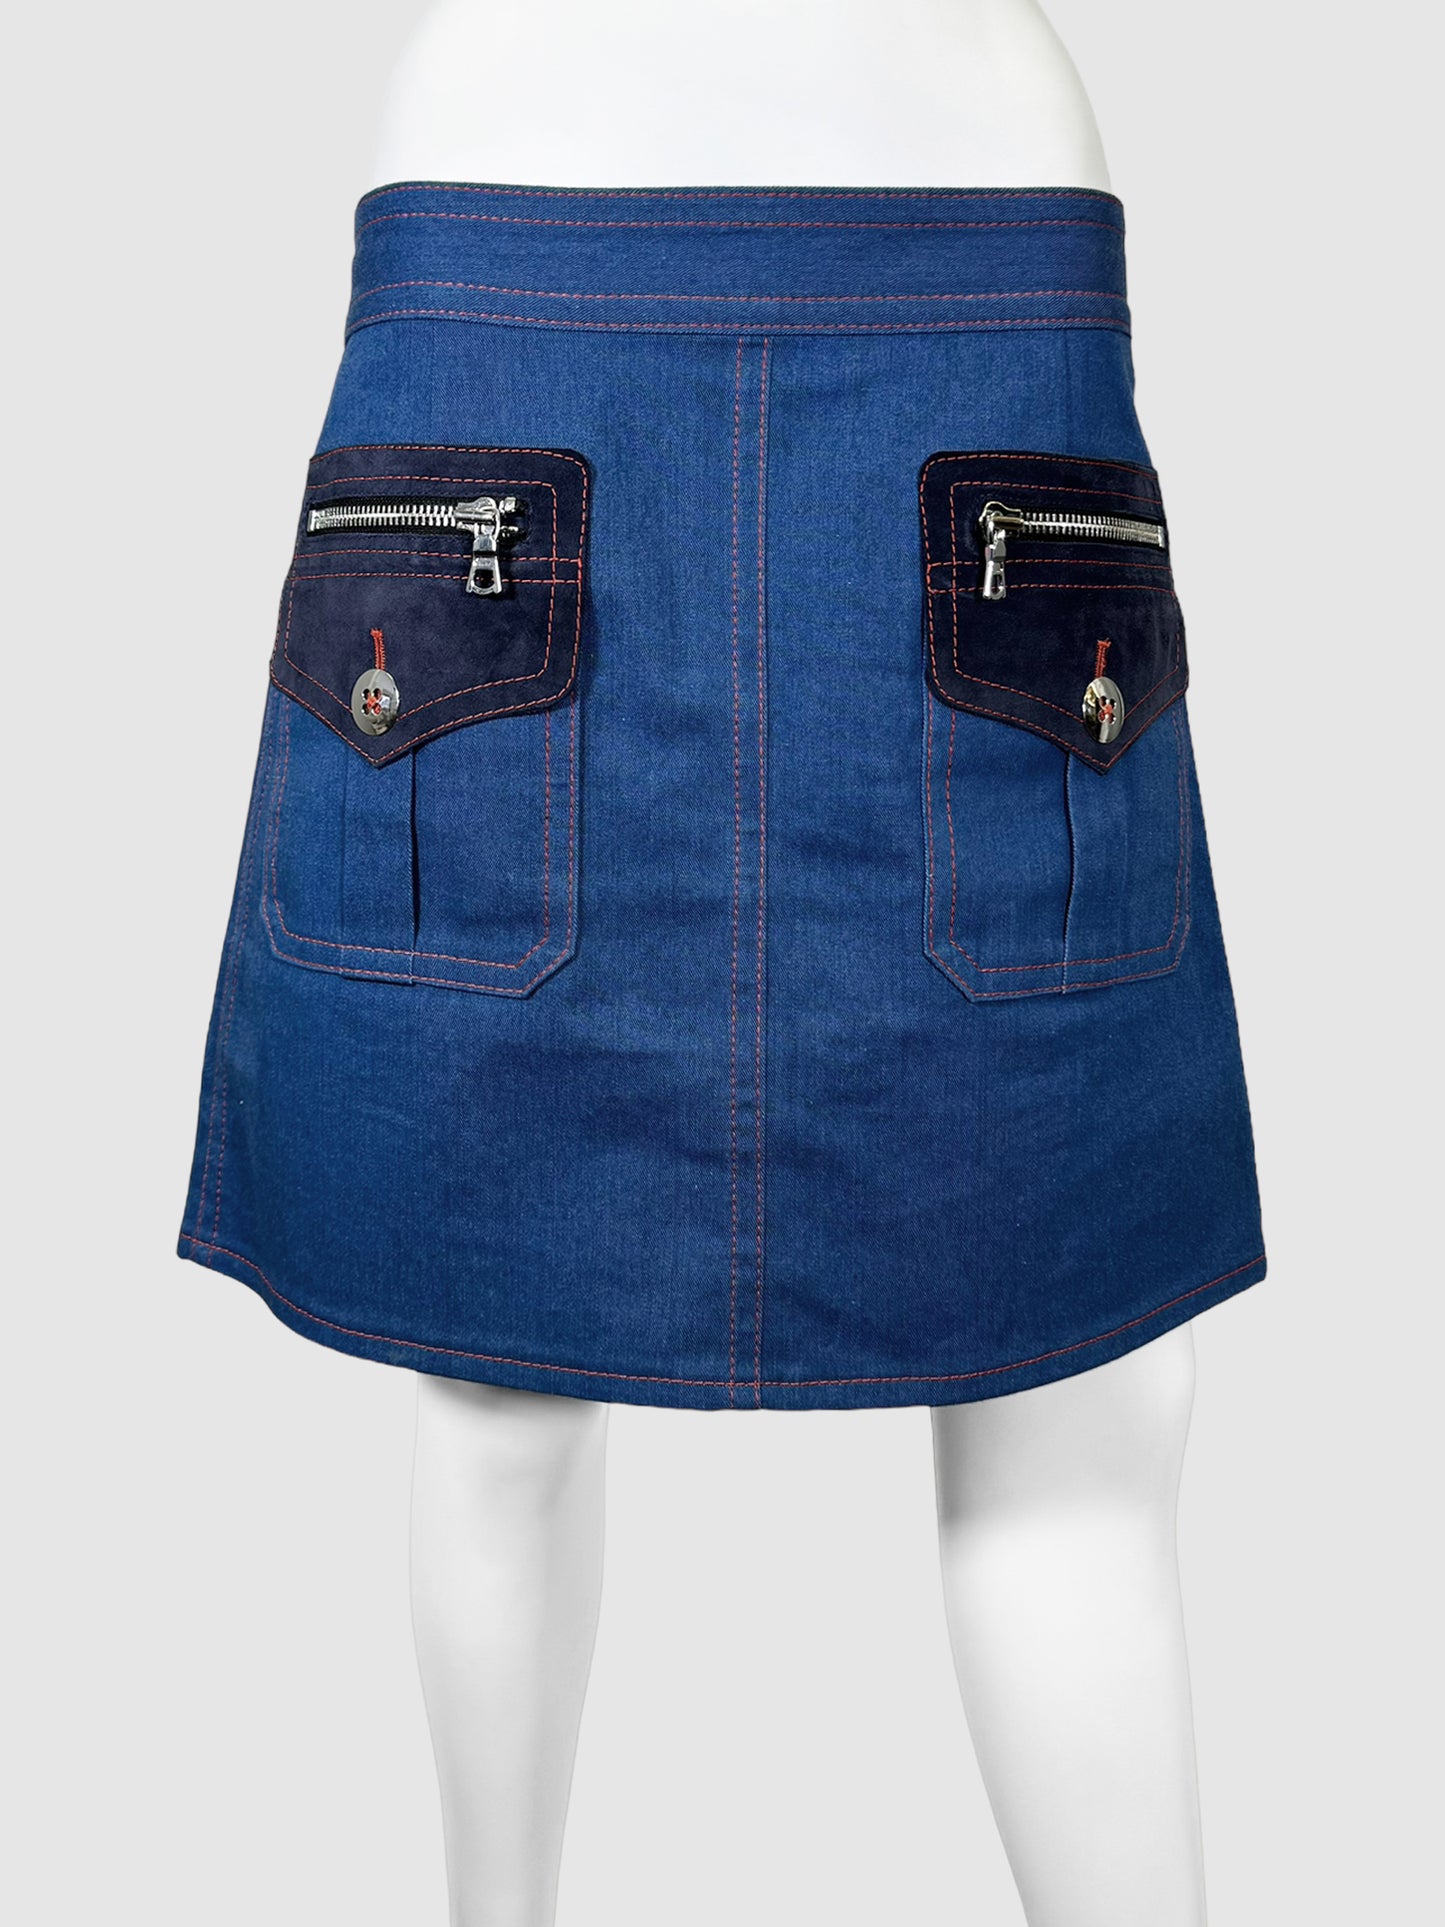 Marc Jacobs Denim Mini Skirt - Size 6